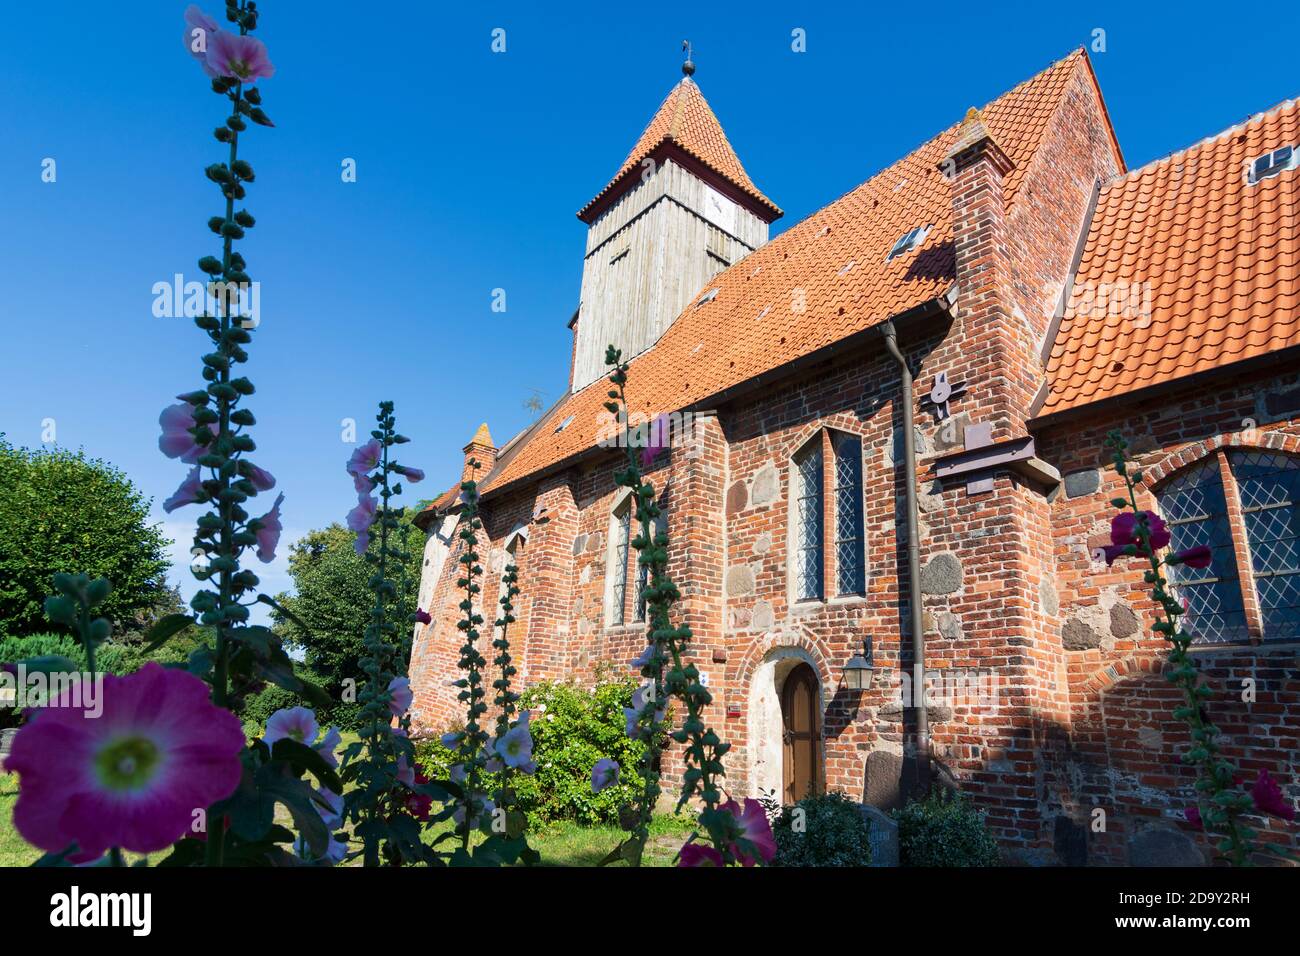 Mönchgut: chiesa nel villaggio di Middelhagen, Ostsee (Mar Baltico), Isola di Rügen, Meclemburgo-Vorpommern, Germania Foto Stock